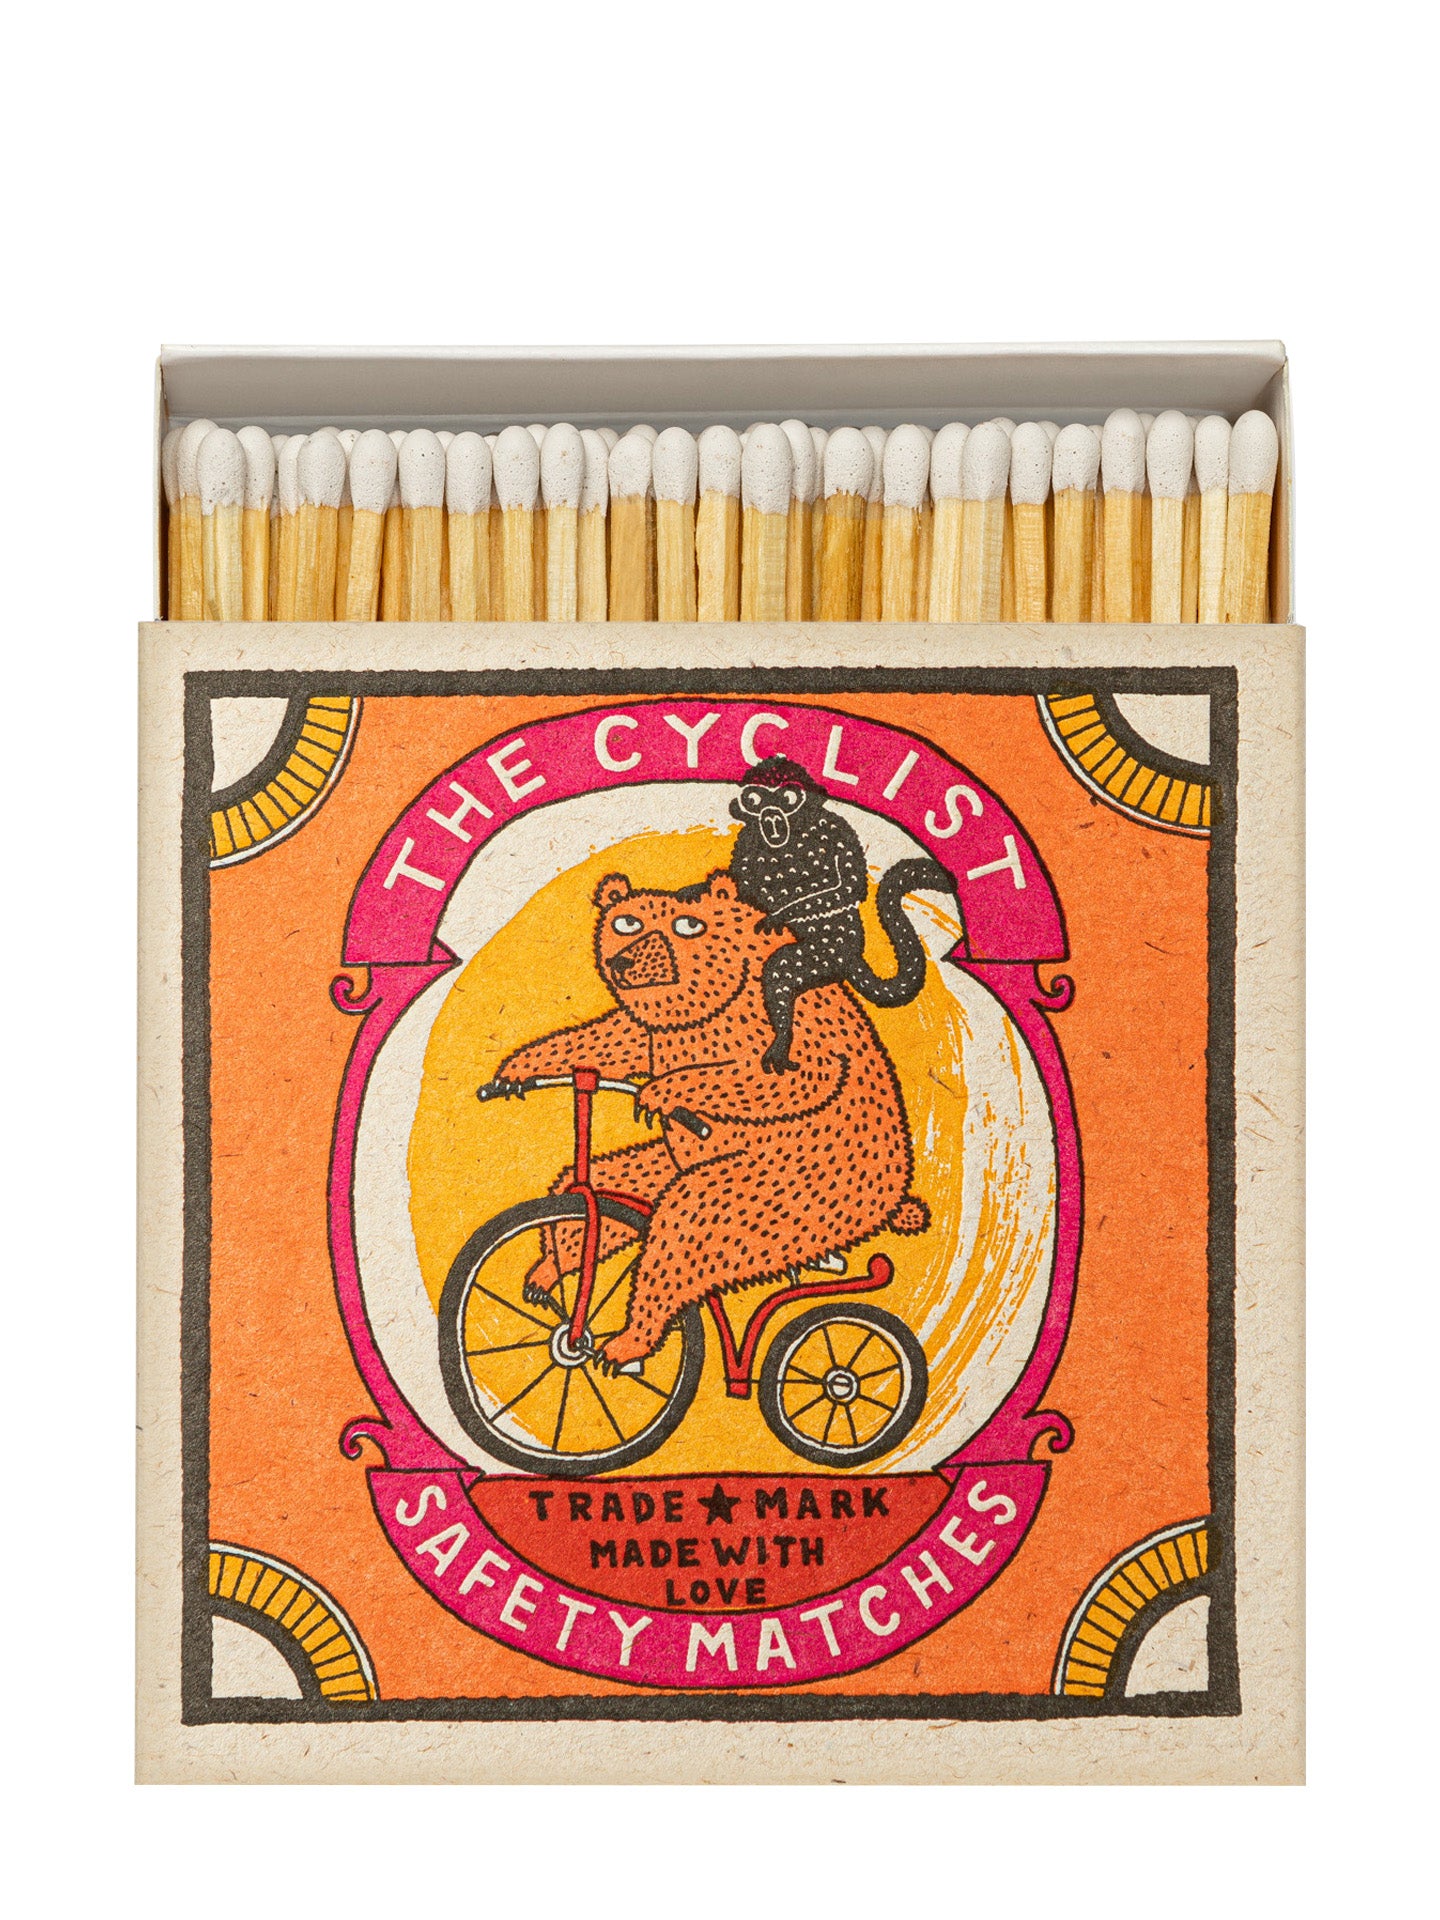 The Cyclist matchbox